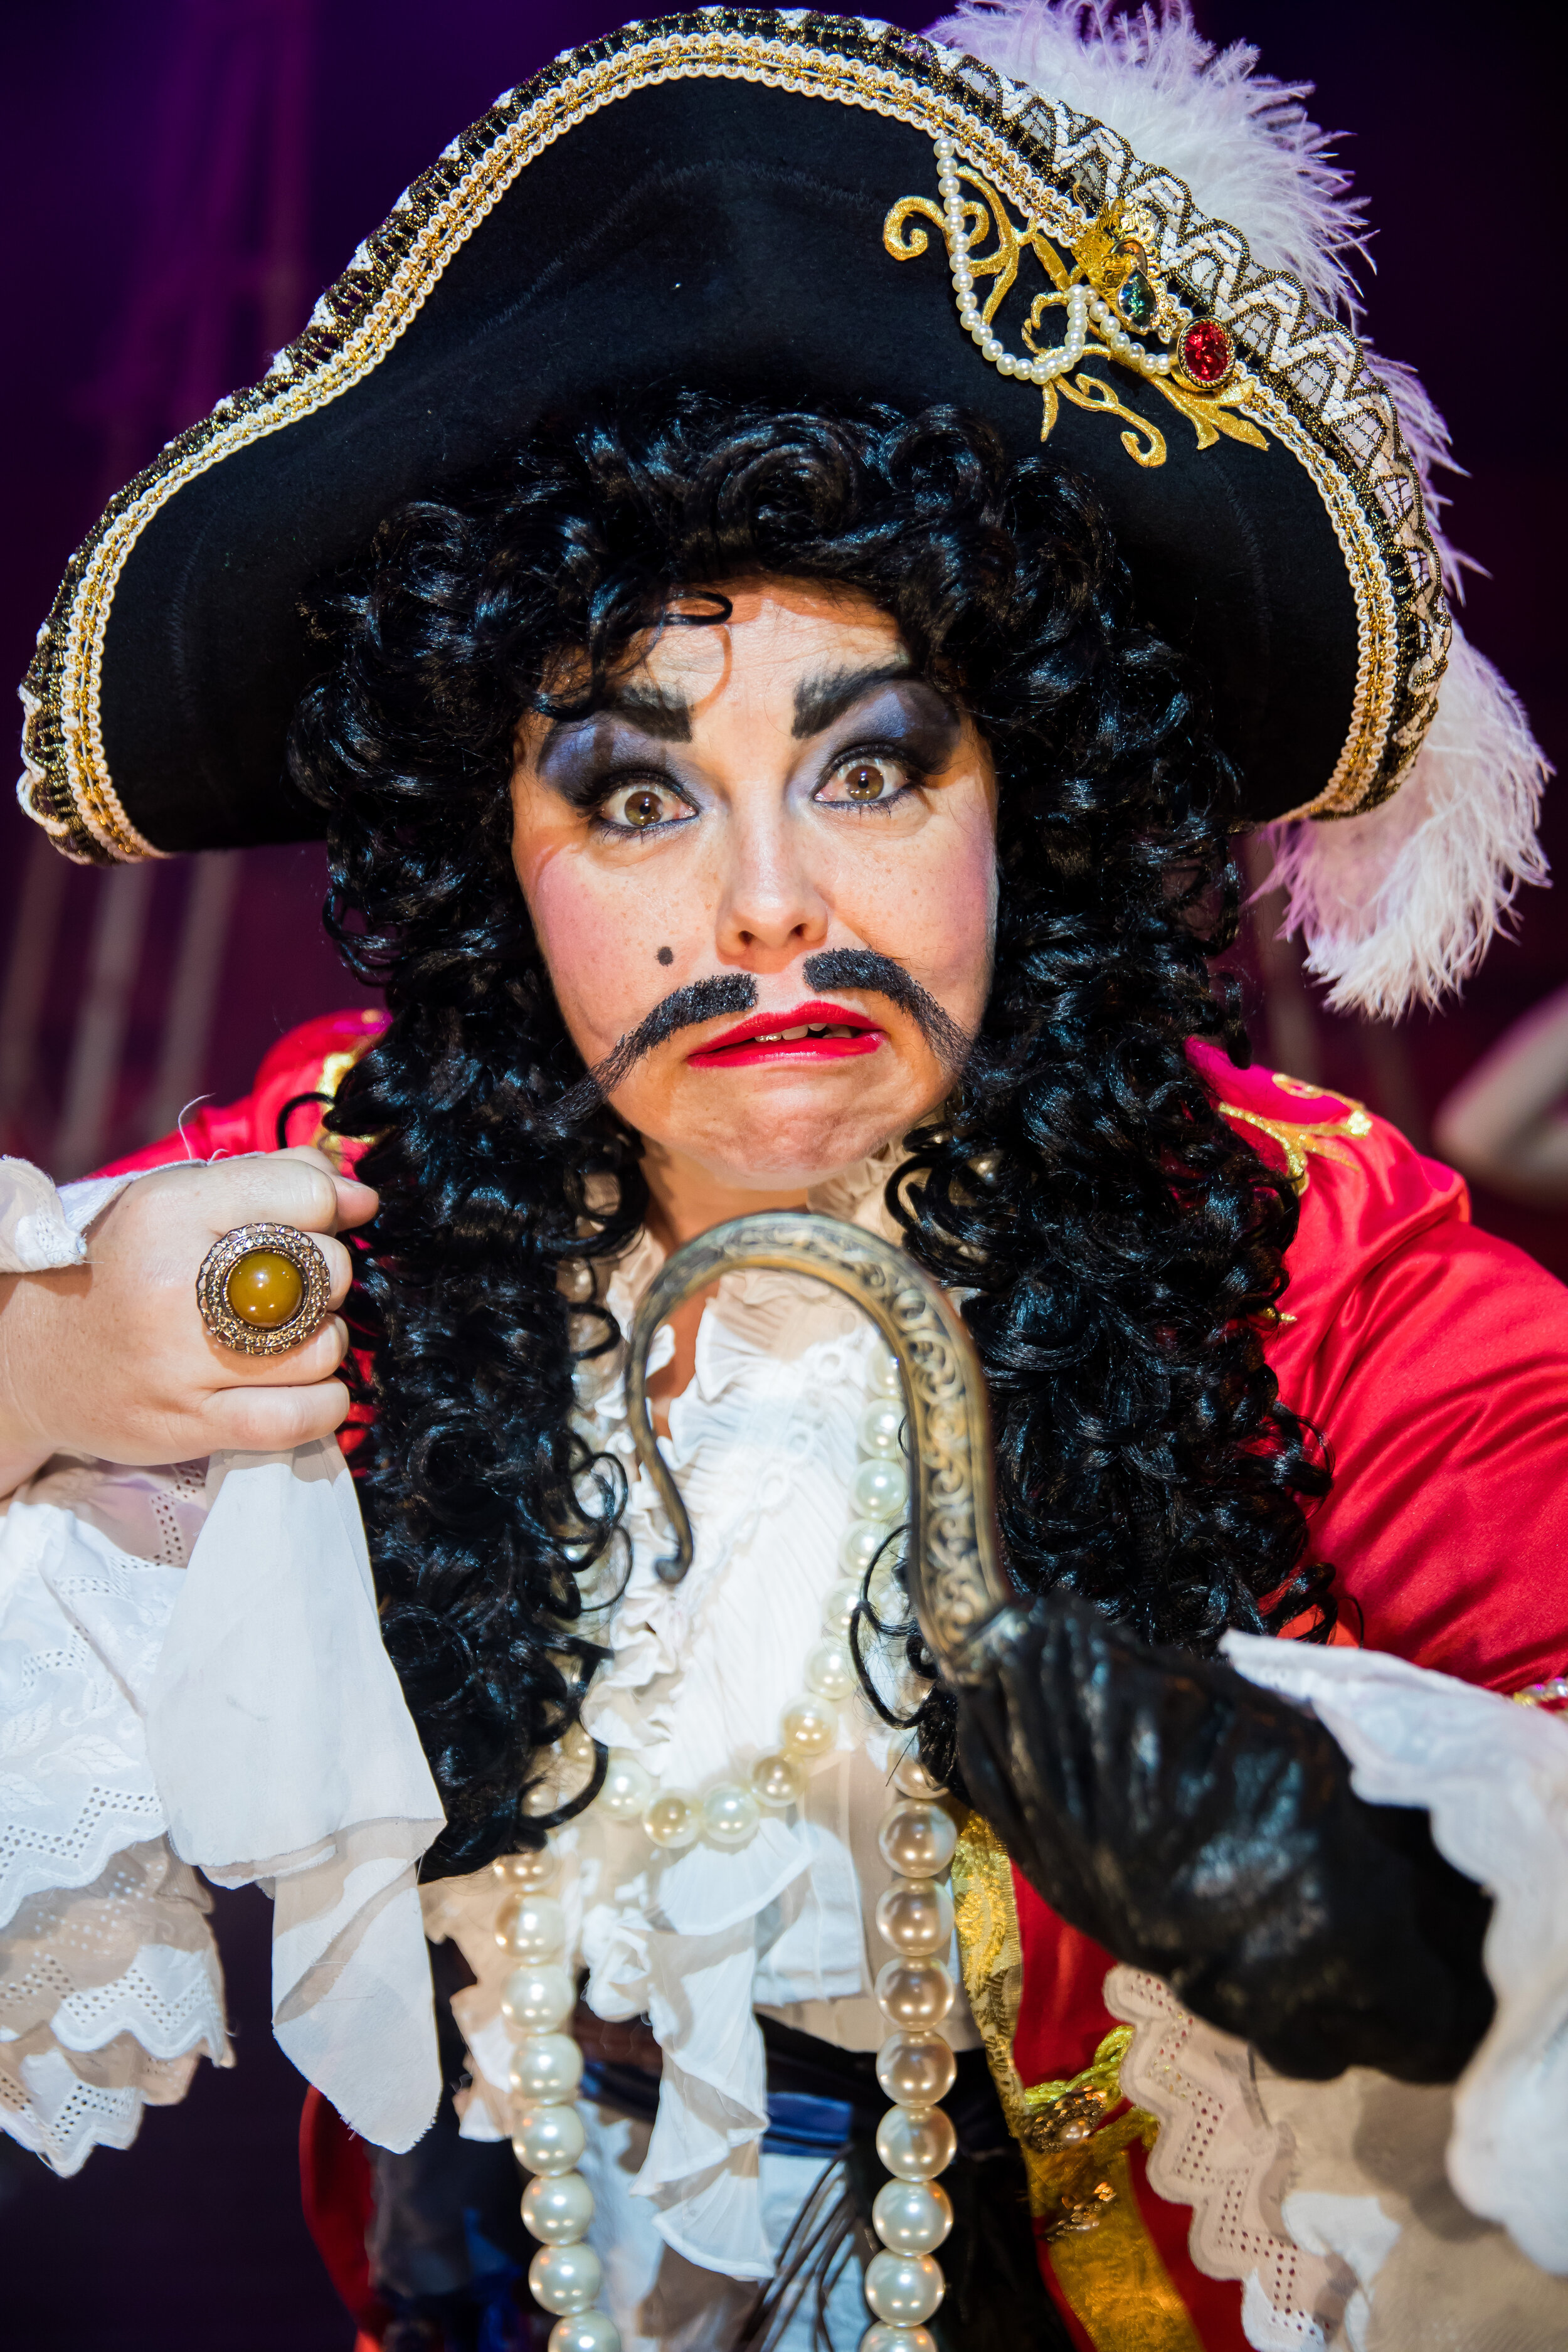  Captain Hooks Pirate Party, Sydney Opera House